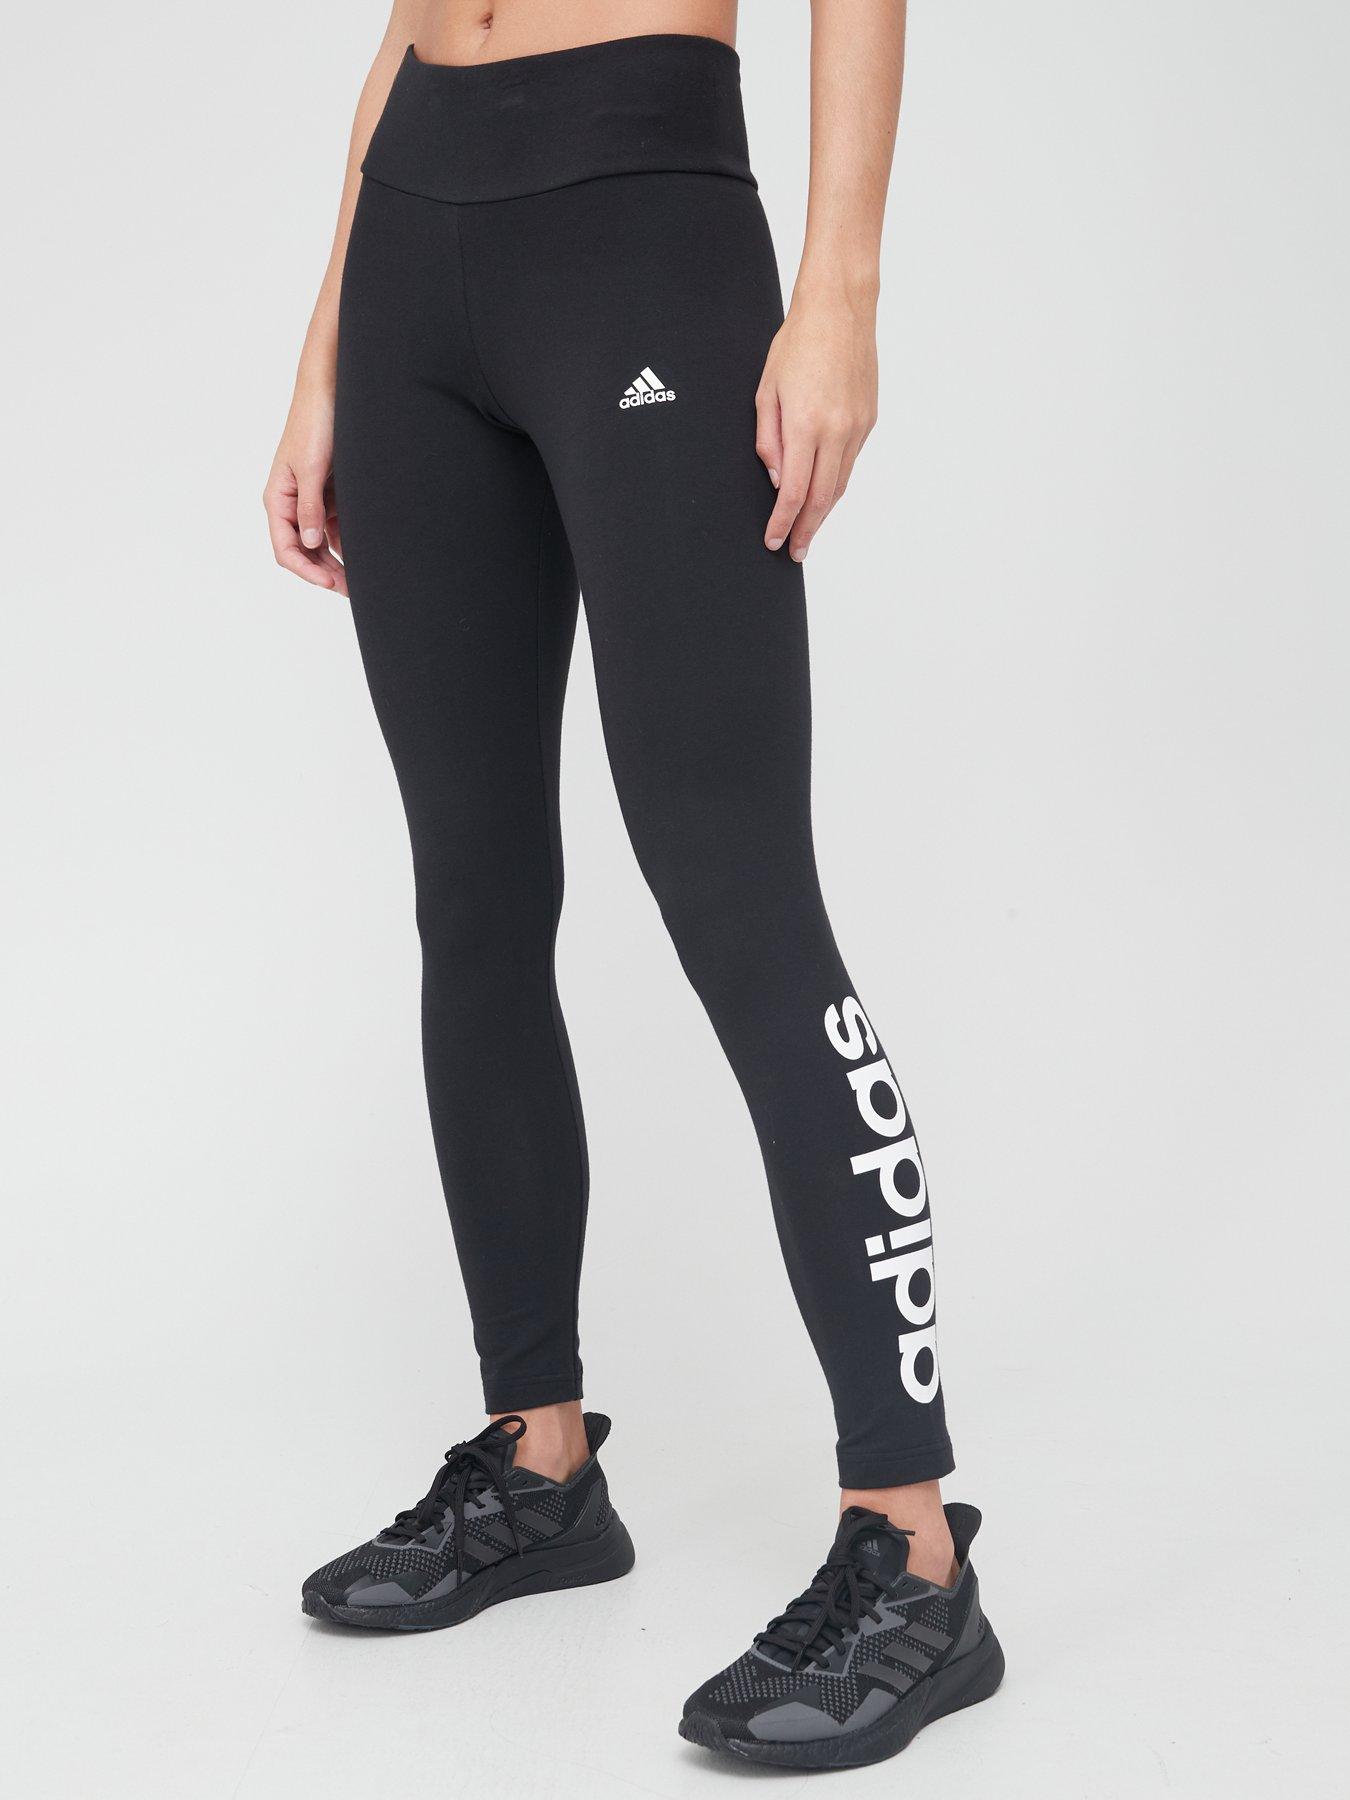 adidas Women's Designed 2 Move Climalite 3-Stripes Tights, Black/White,  XSTP, Leggings -  Canada